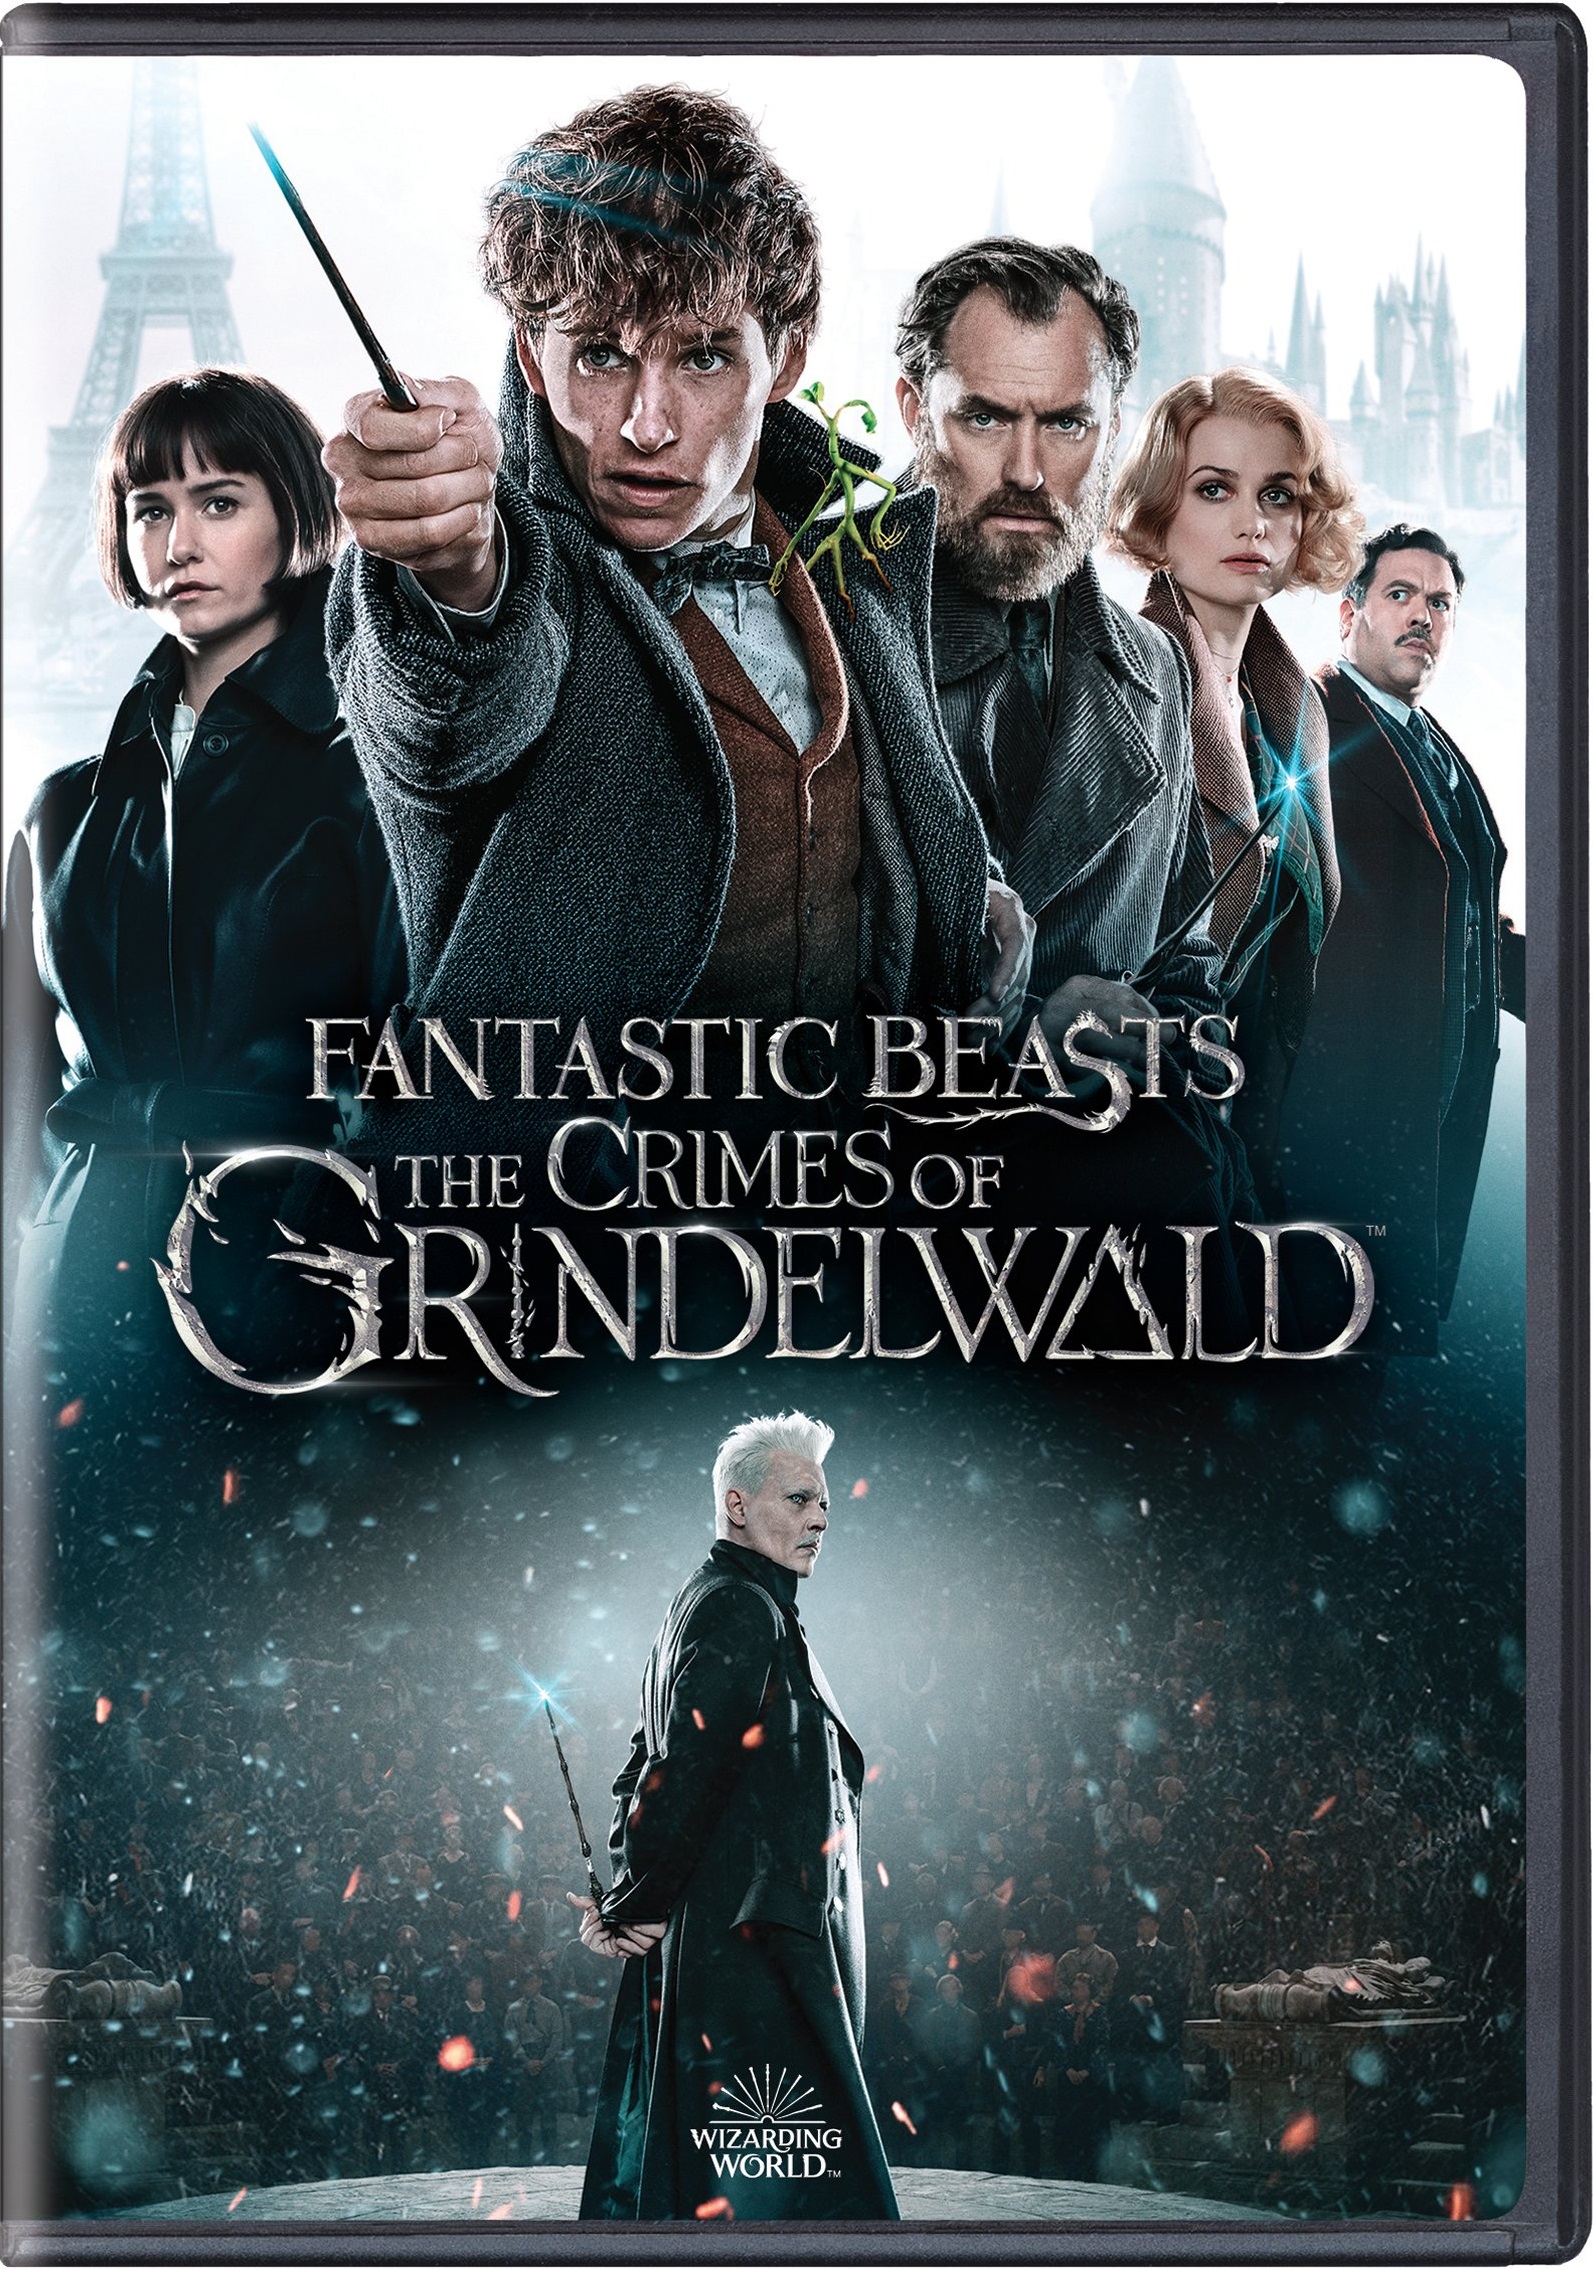 Fantastic beasts : The crimes of Grindelwald